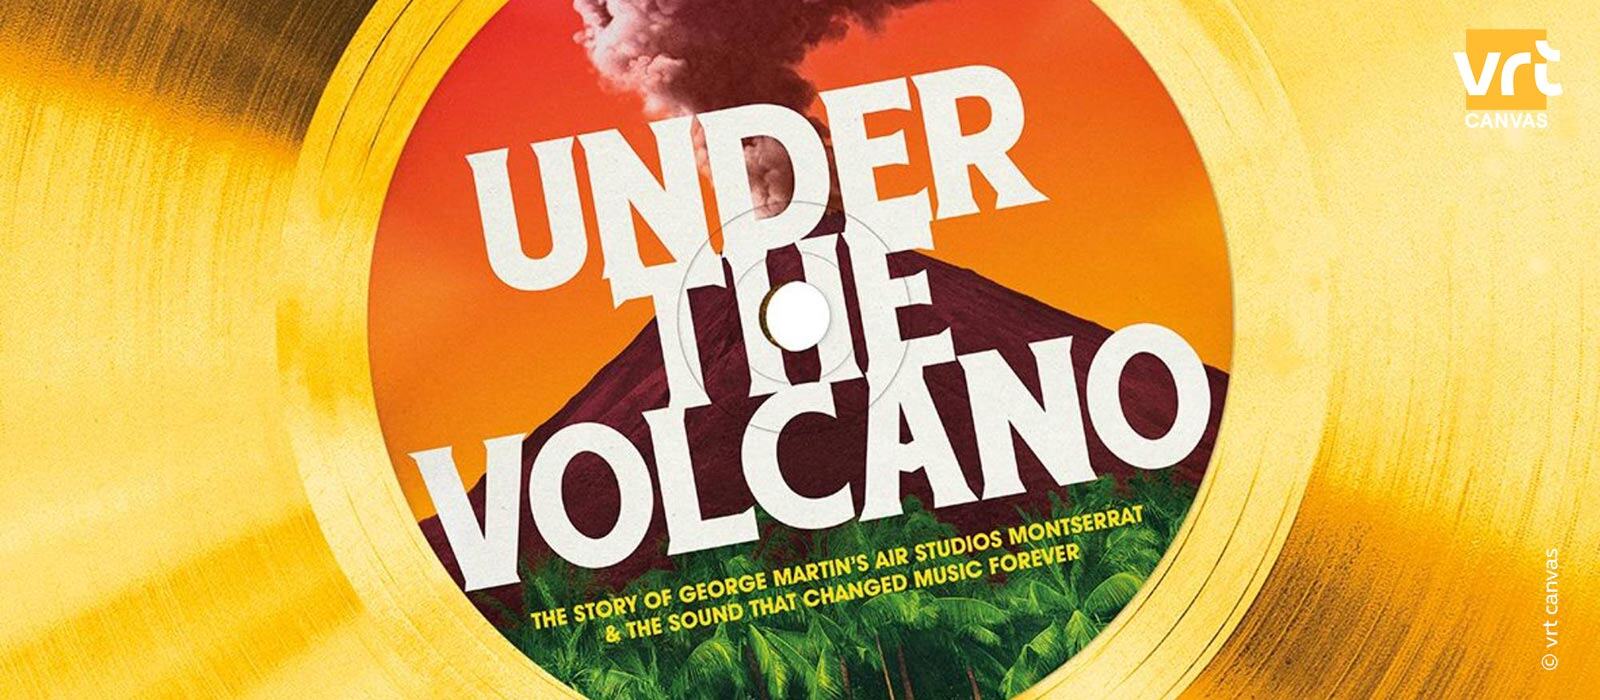 Under The volcano